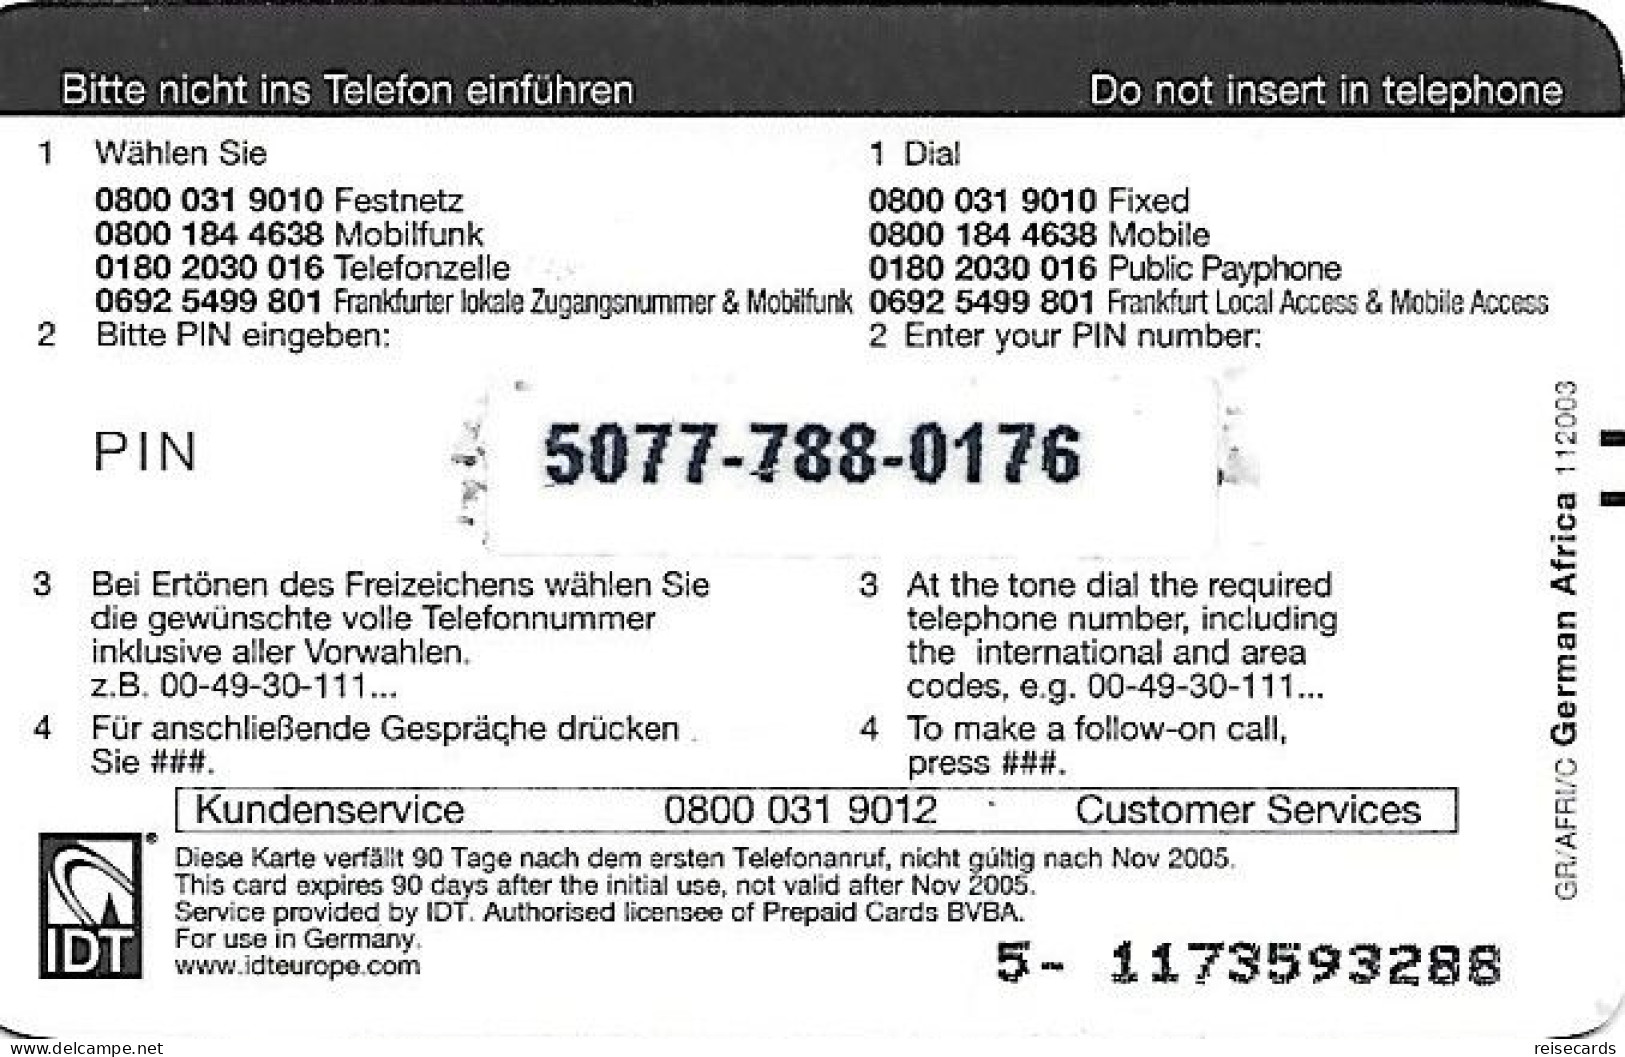 Germany: Prepaid IDT Afrika Karte 11.05 - Cellulari, Carte Prepagate E Ricariche